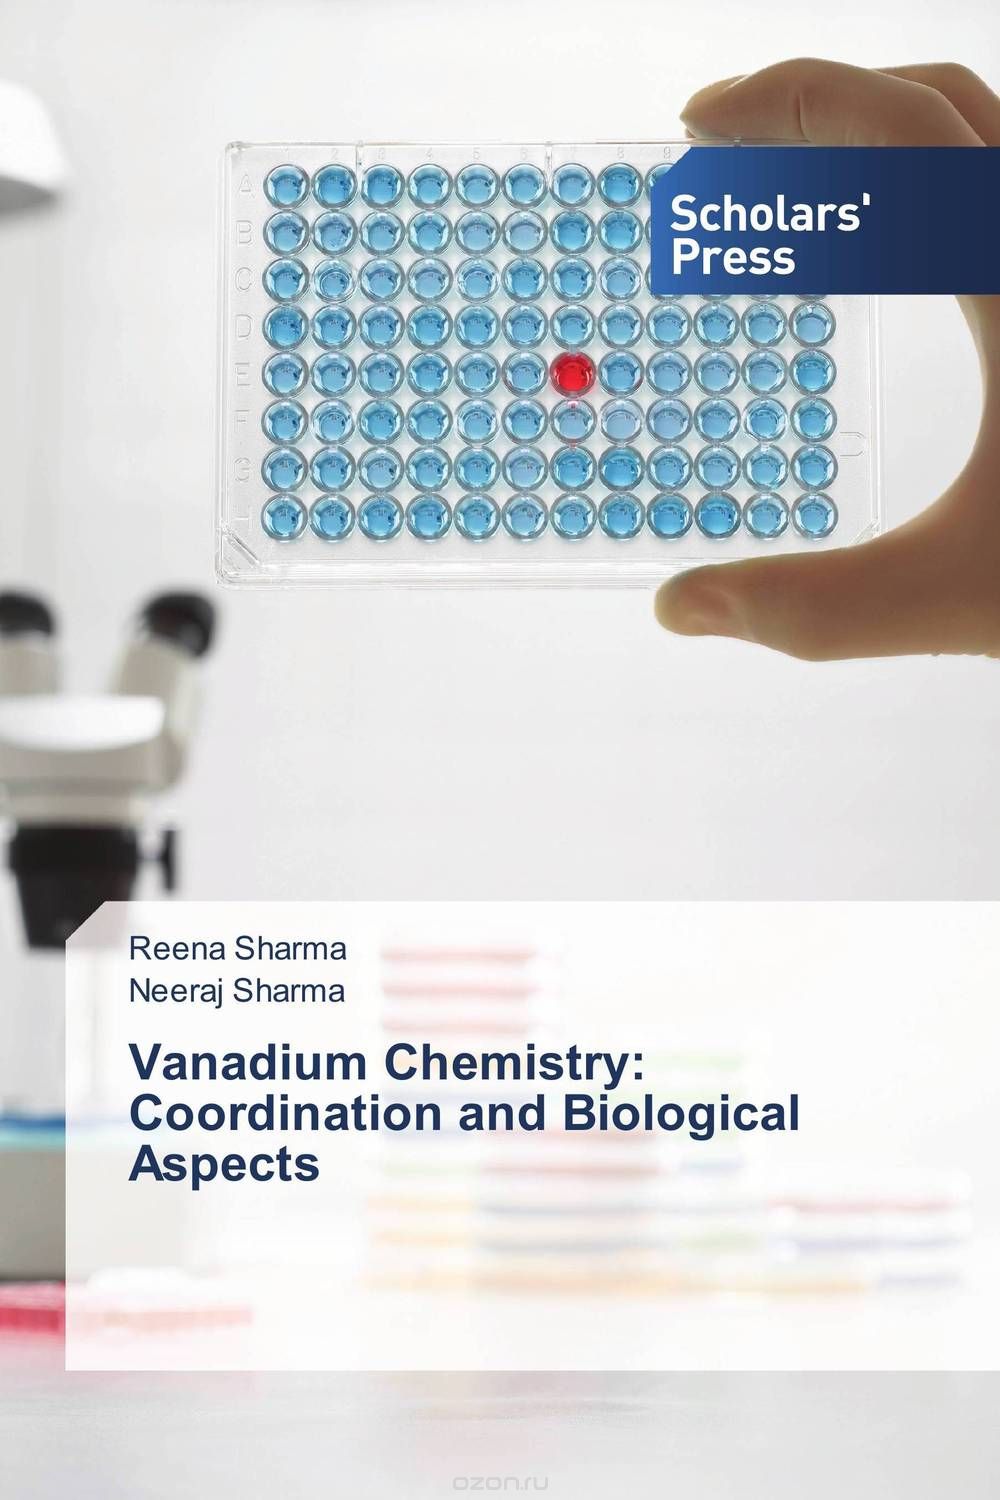 Скачать книгу "Vanadium Chemistry: Coordination and Biological Aspects"